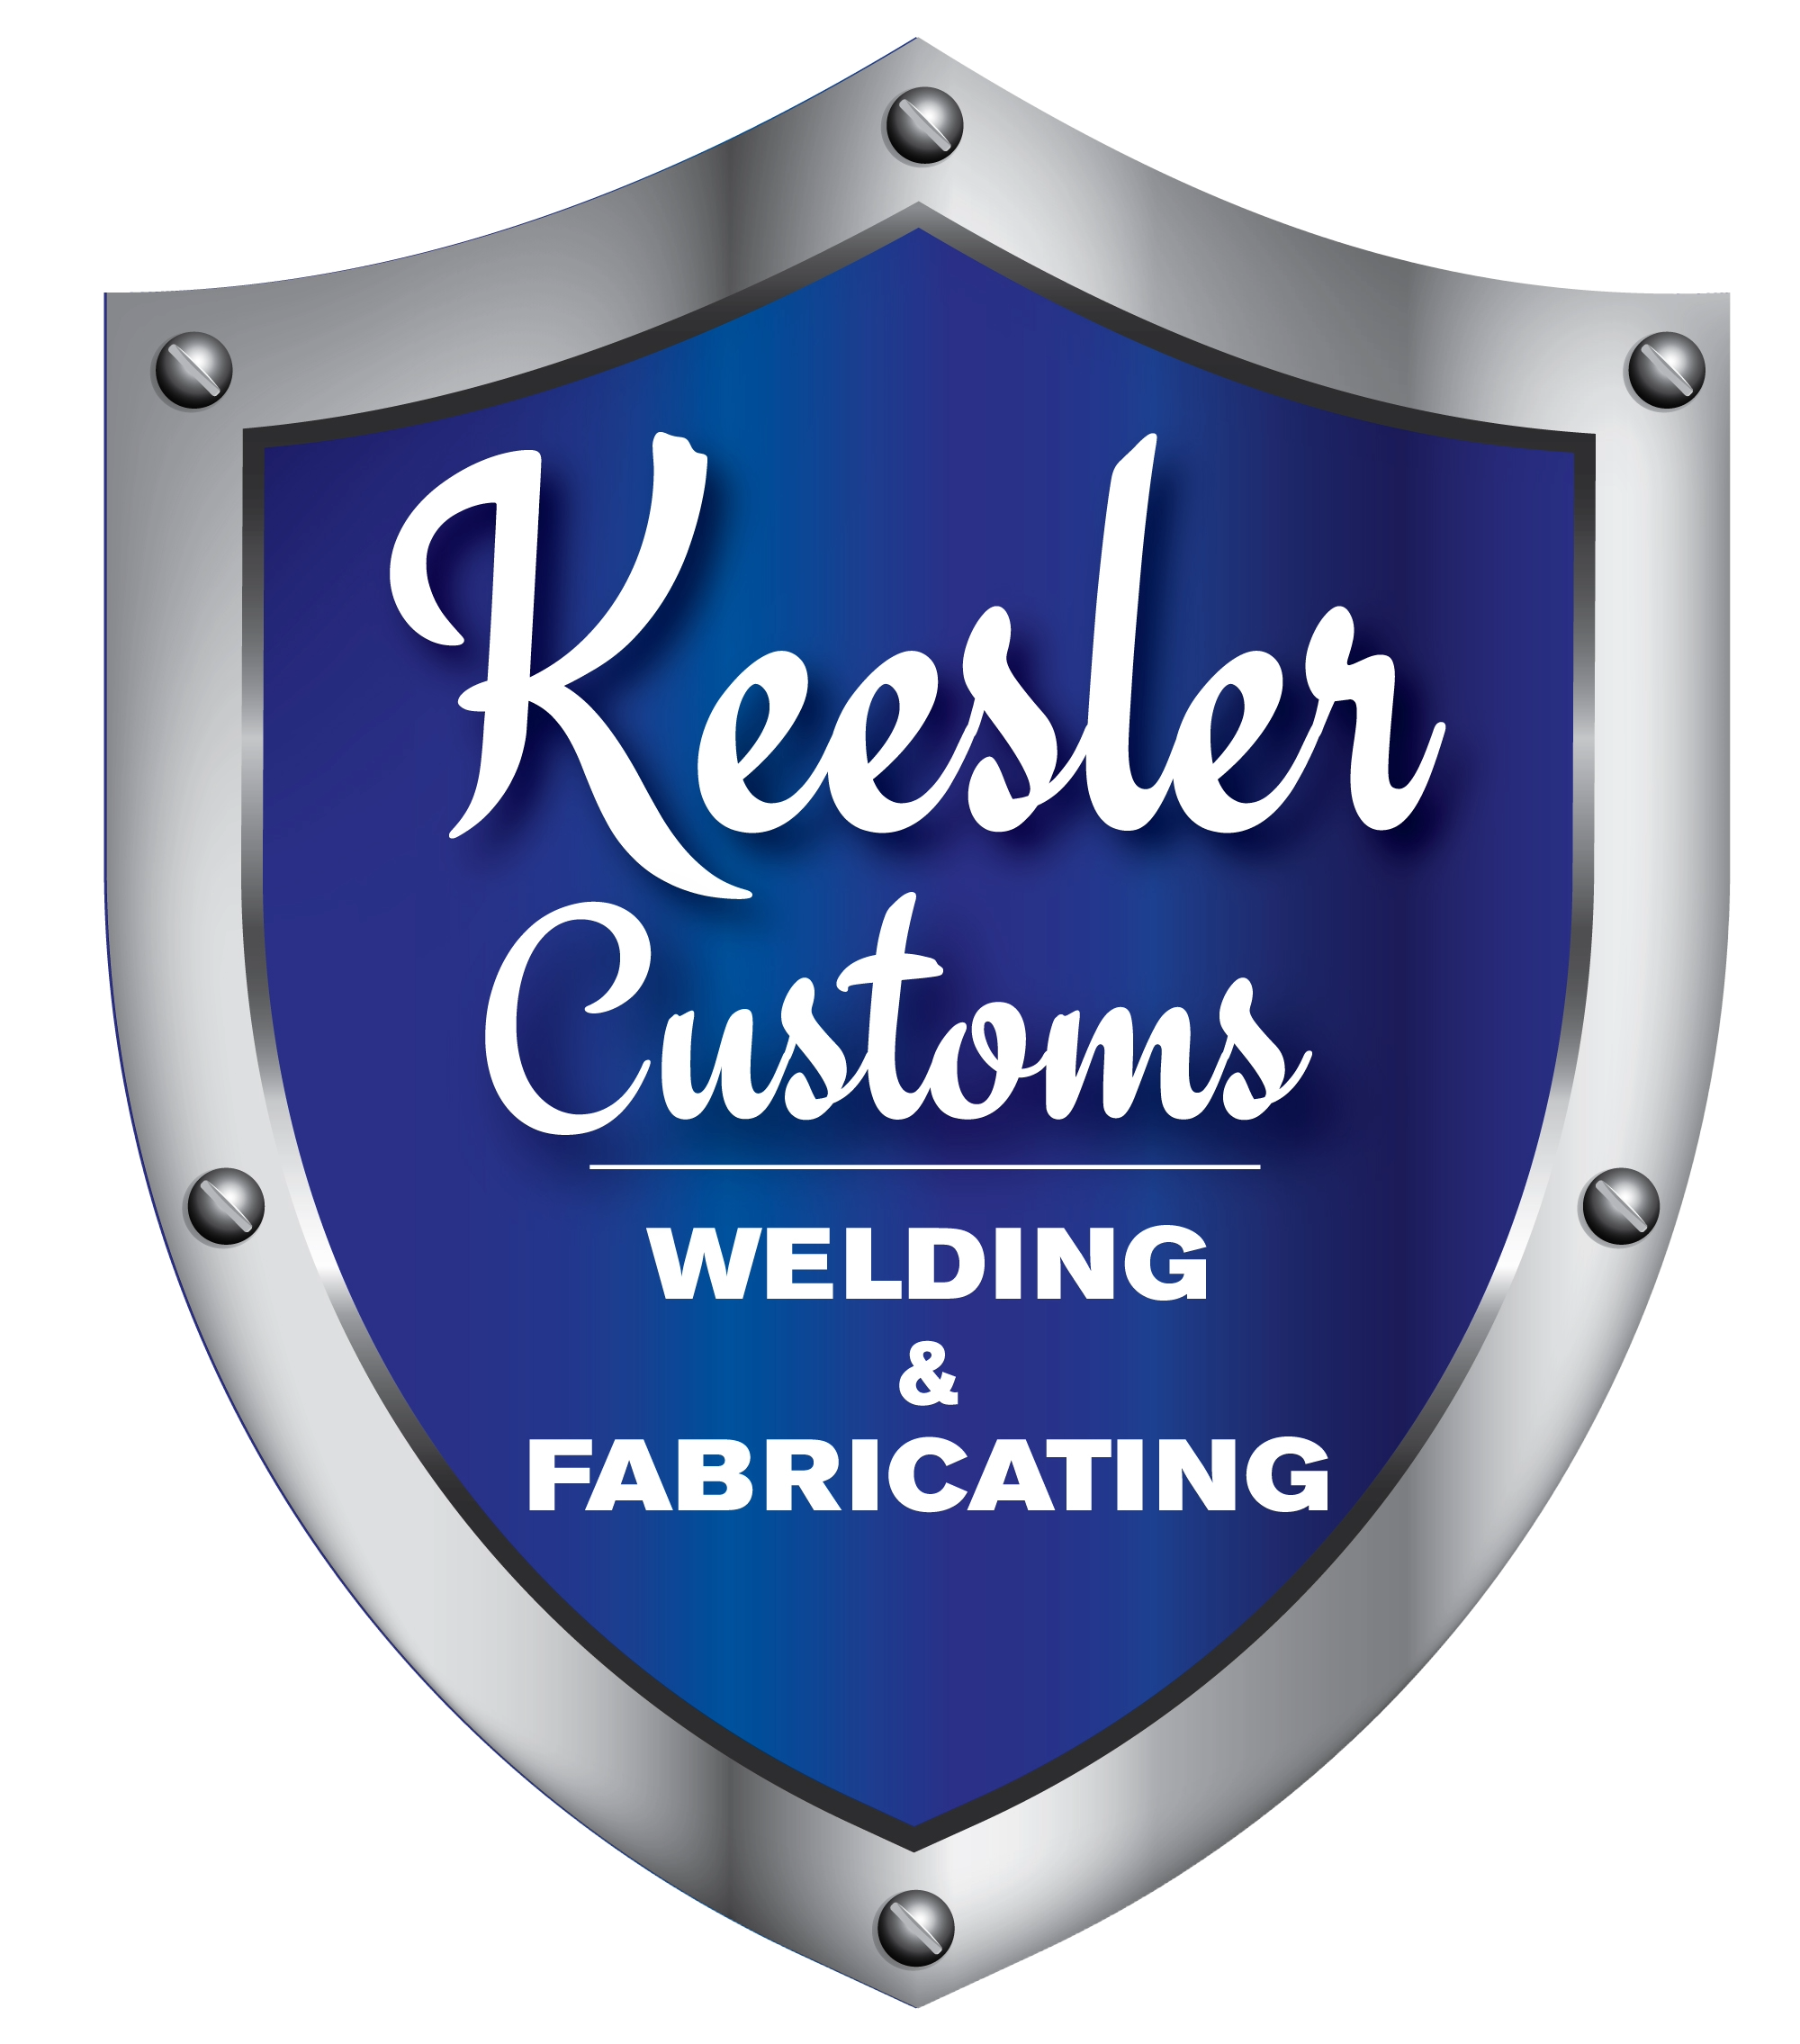 Keesler Customs